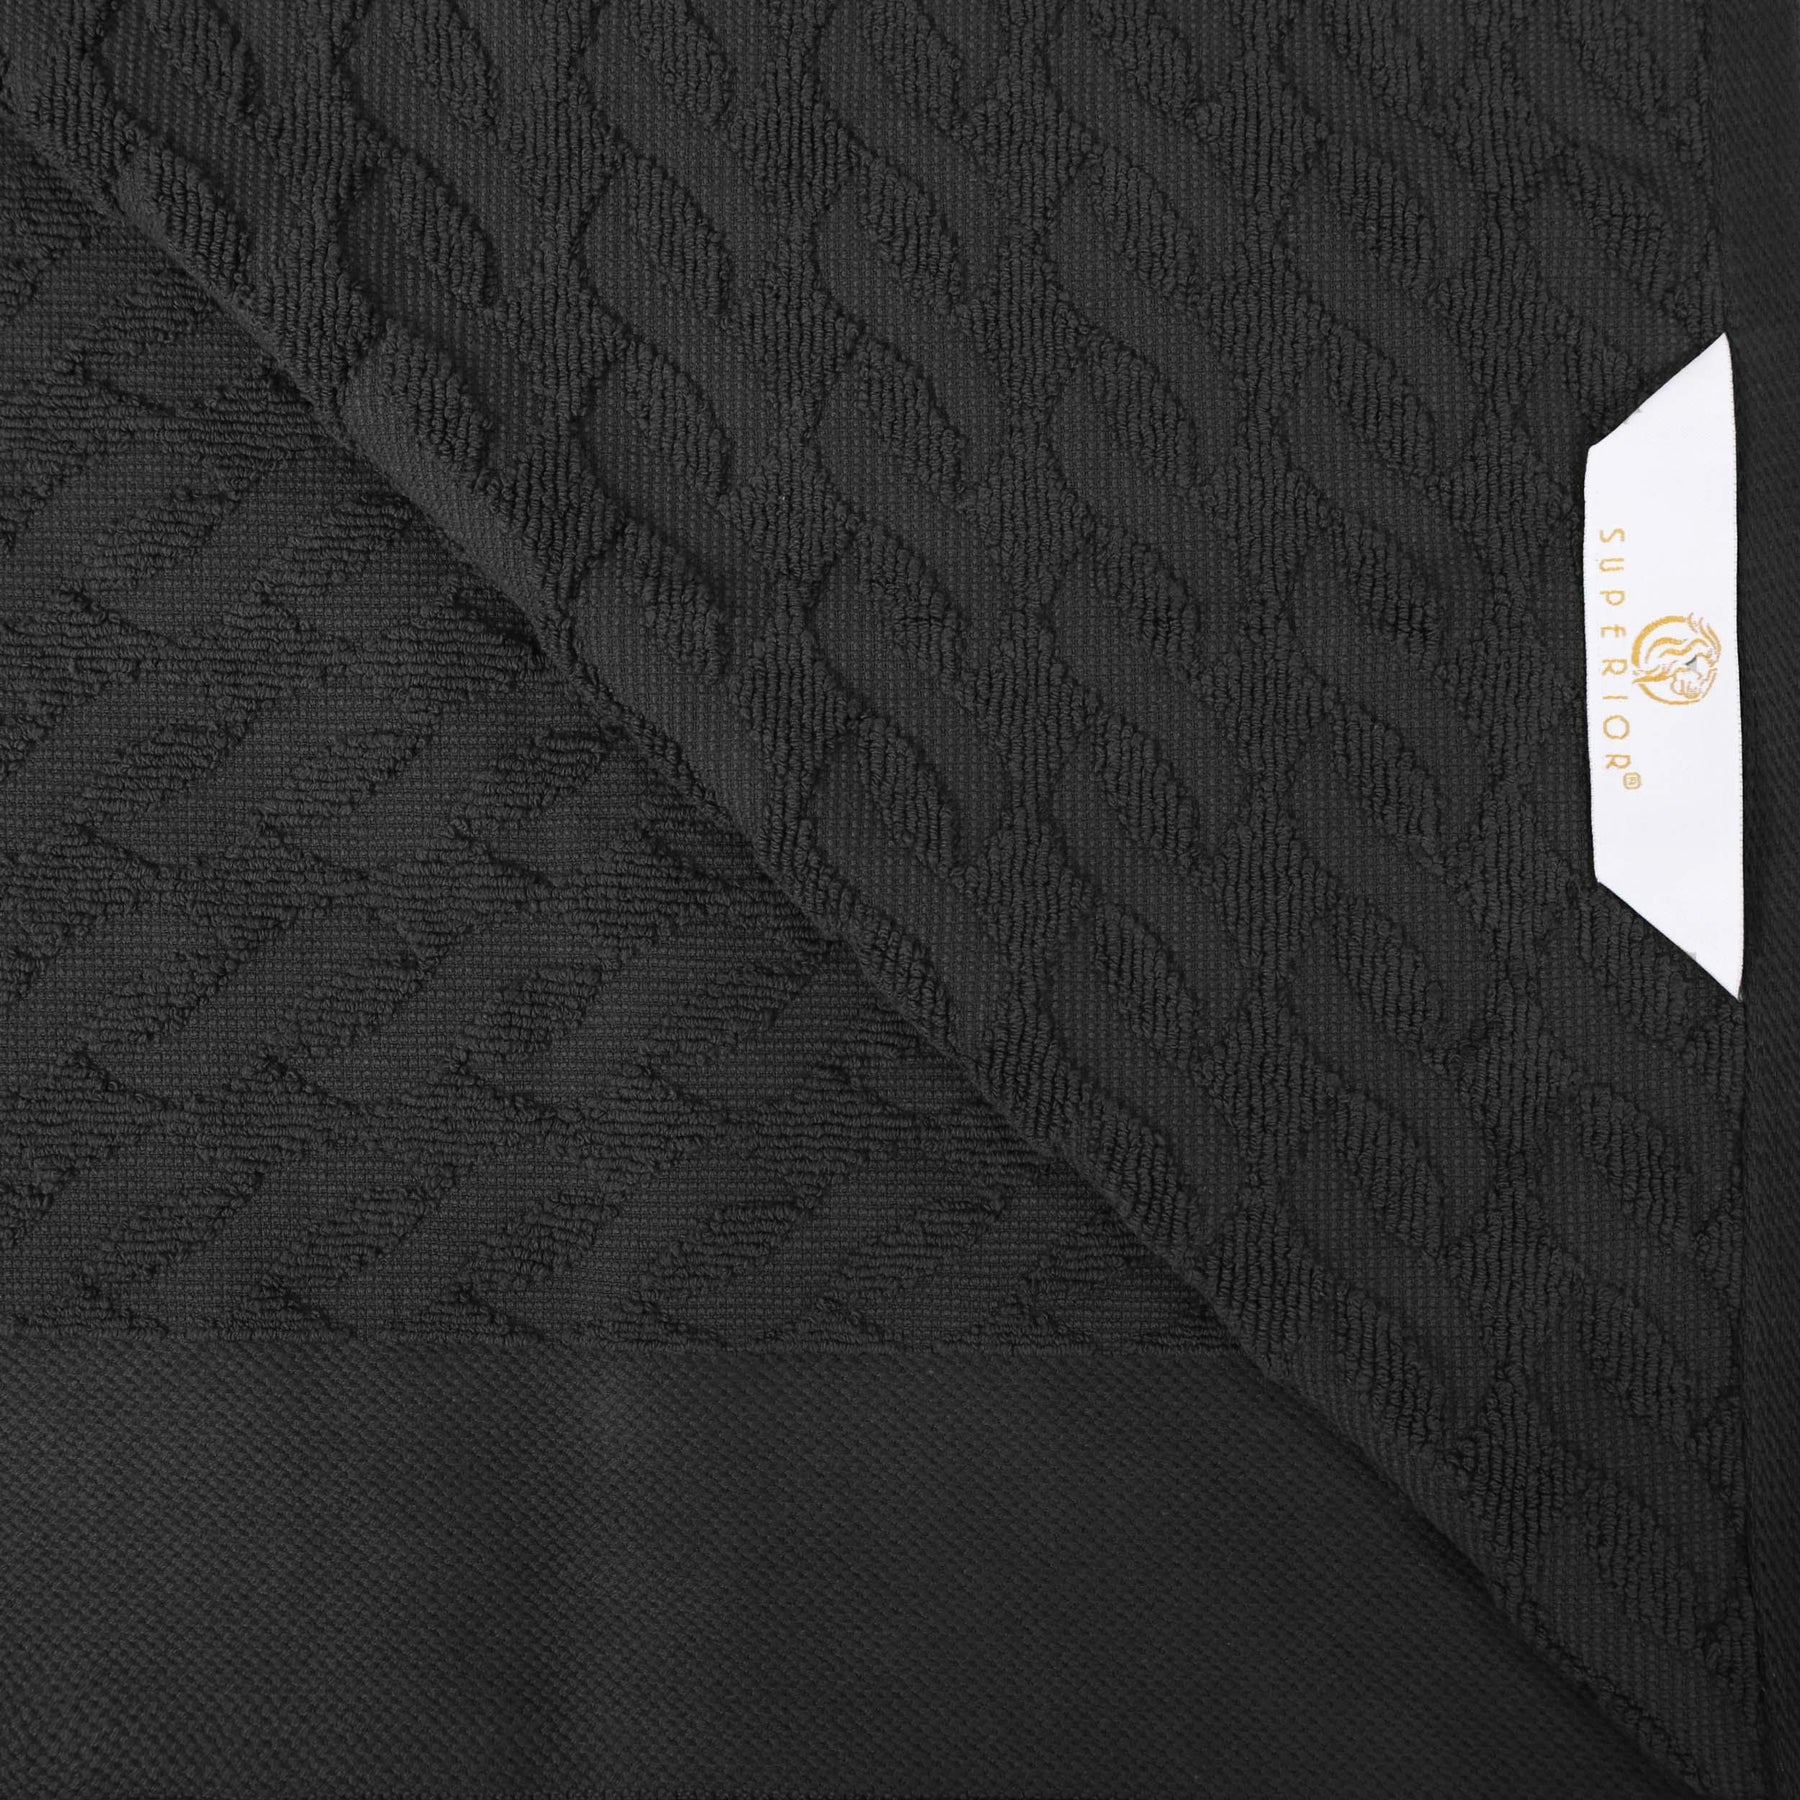 Premium Turkish Cotton Herringbone Jacquard Assorted 6-Piece Towel Set - Black